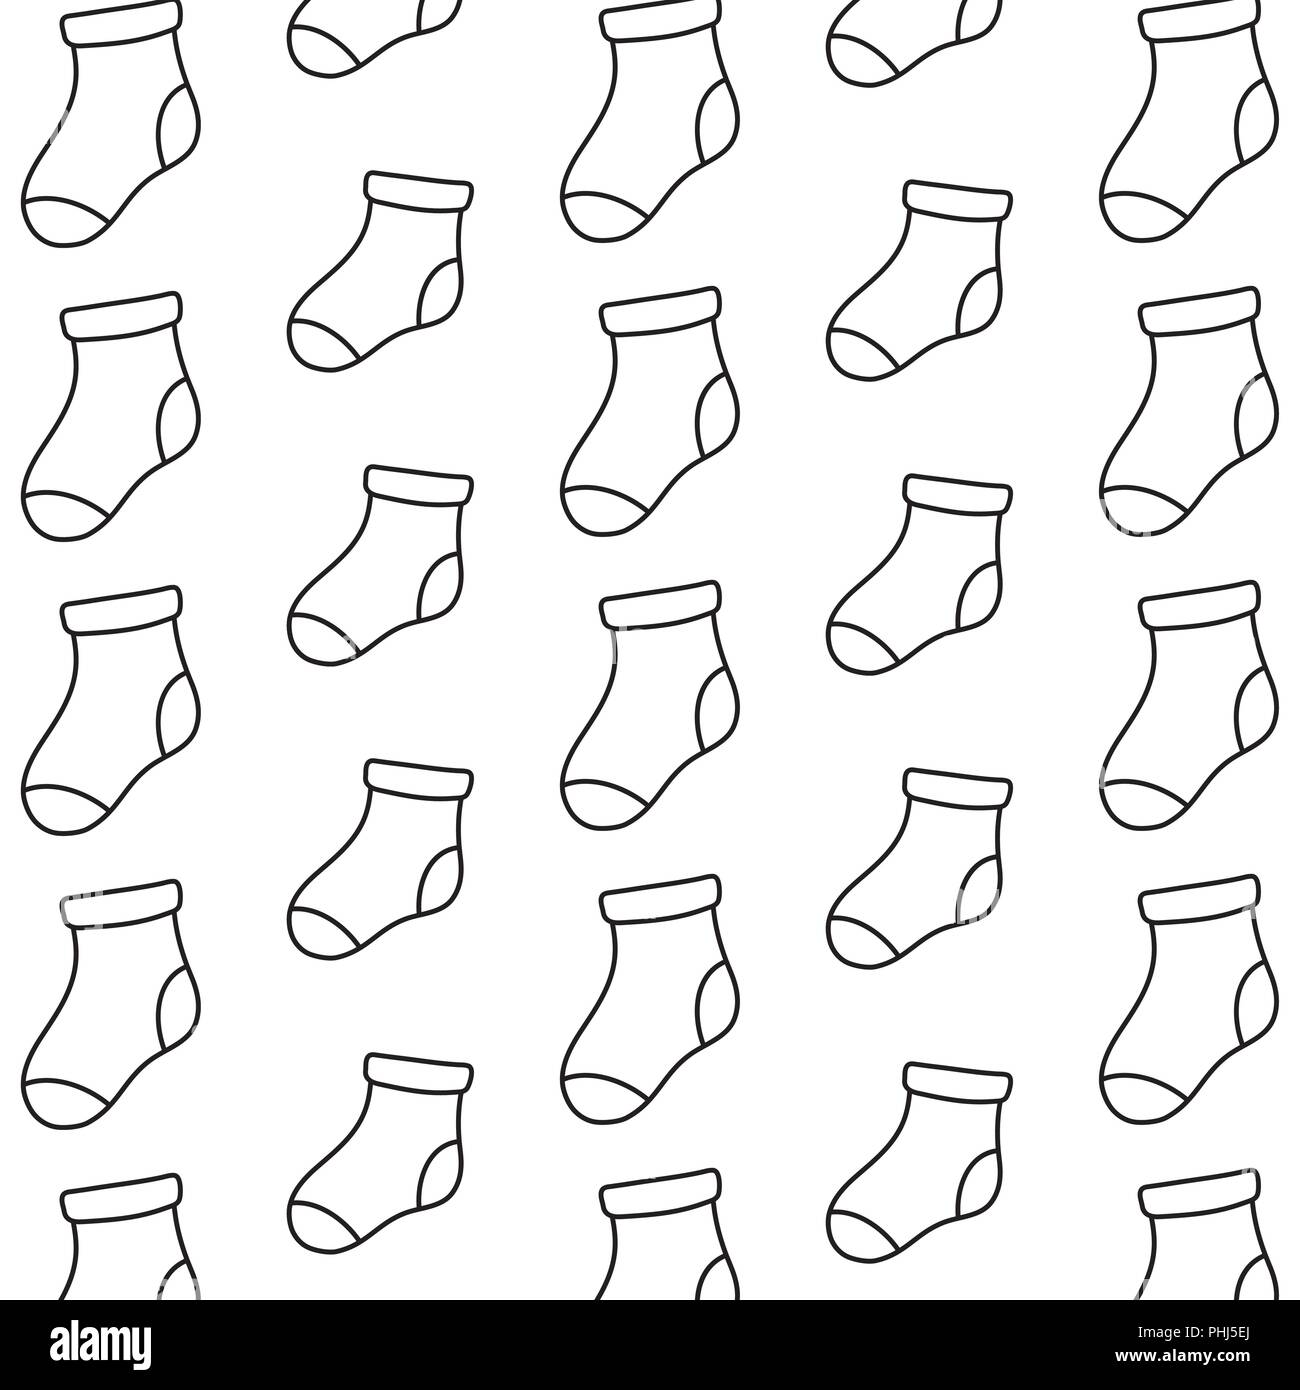 background of baby socks pattern, vector illustration Stock Vector ...